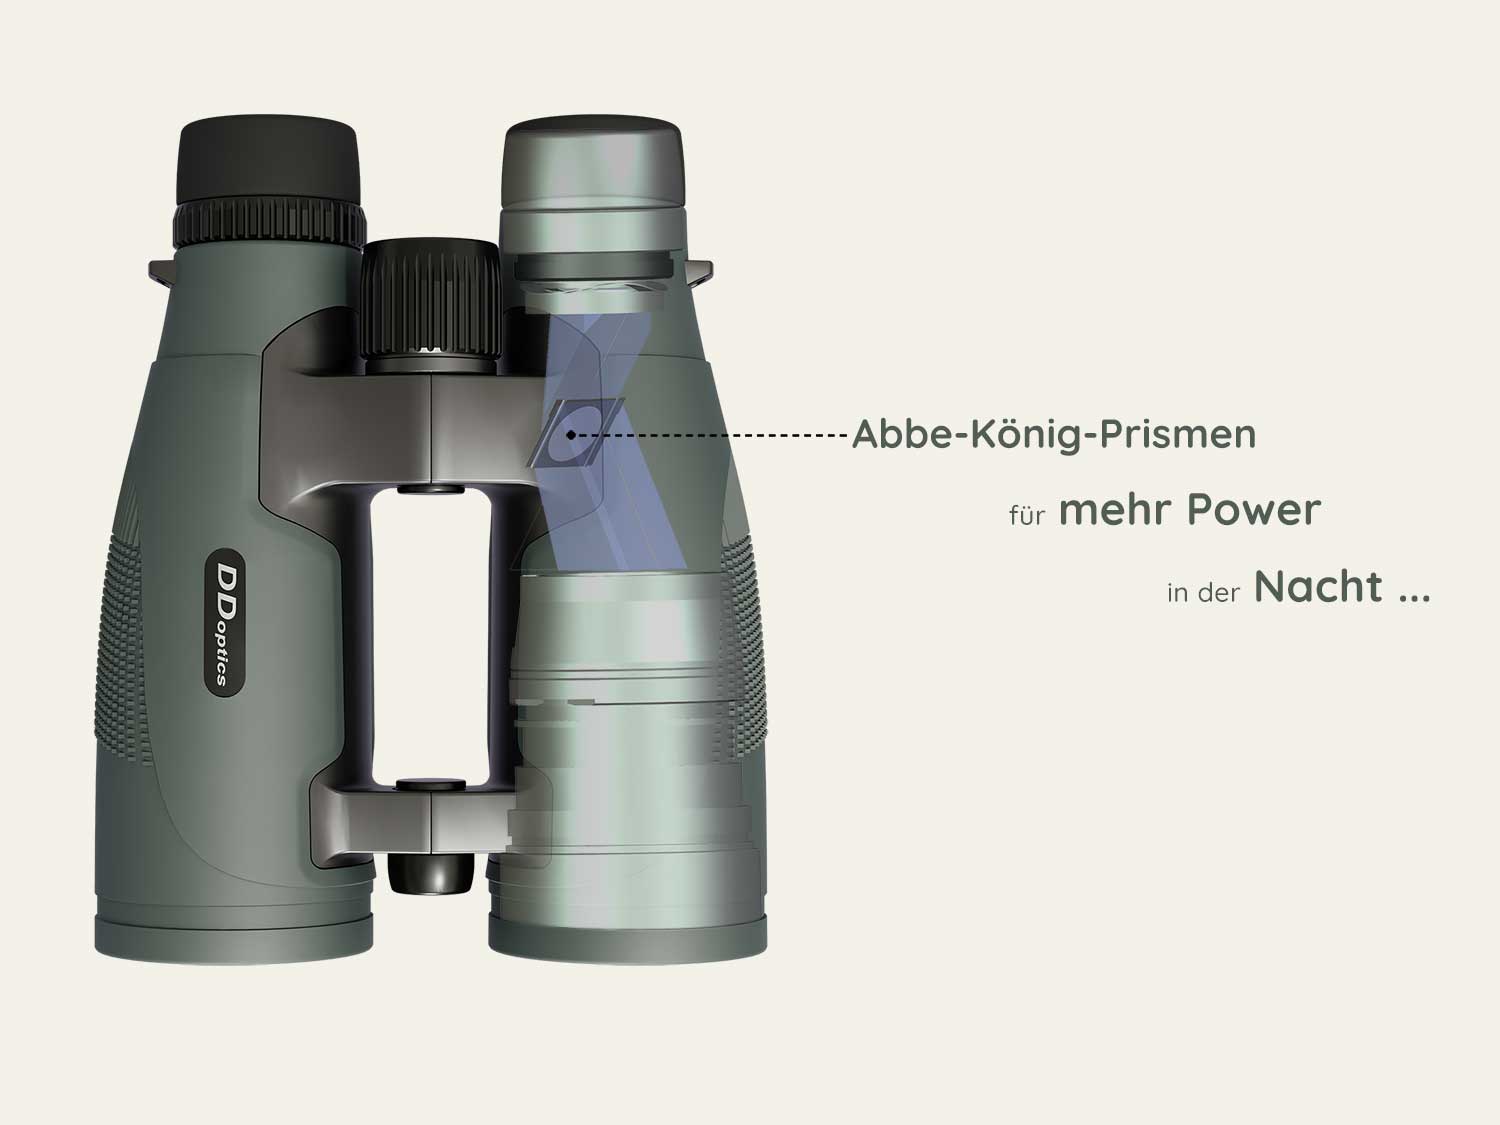 The 12x56 Pirschler binocular are equipped with powerful Abbe-König prisms